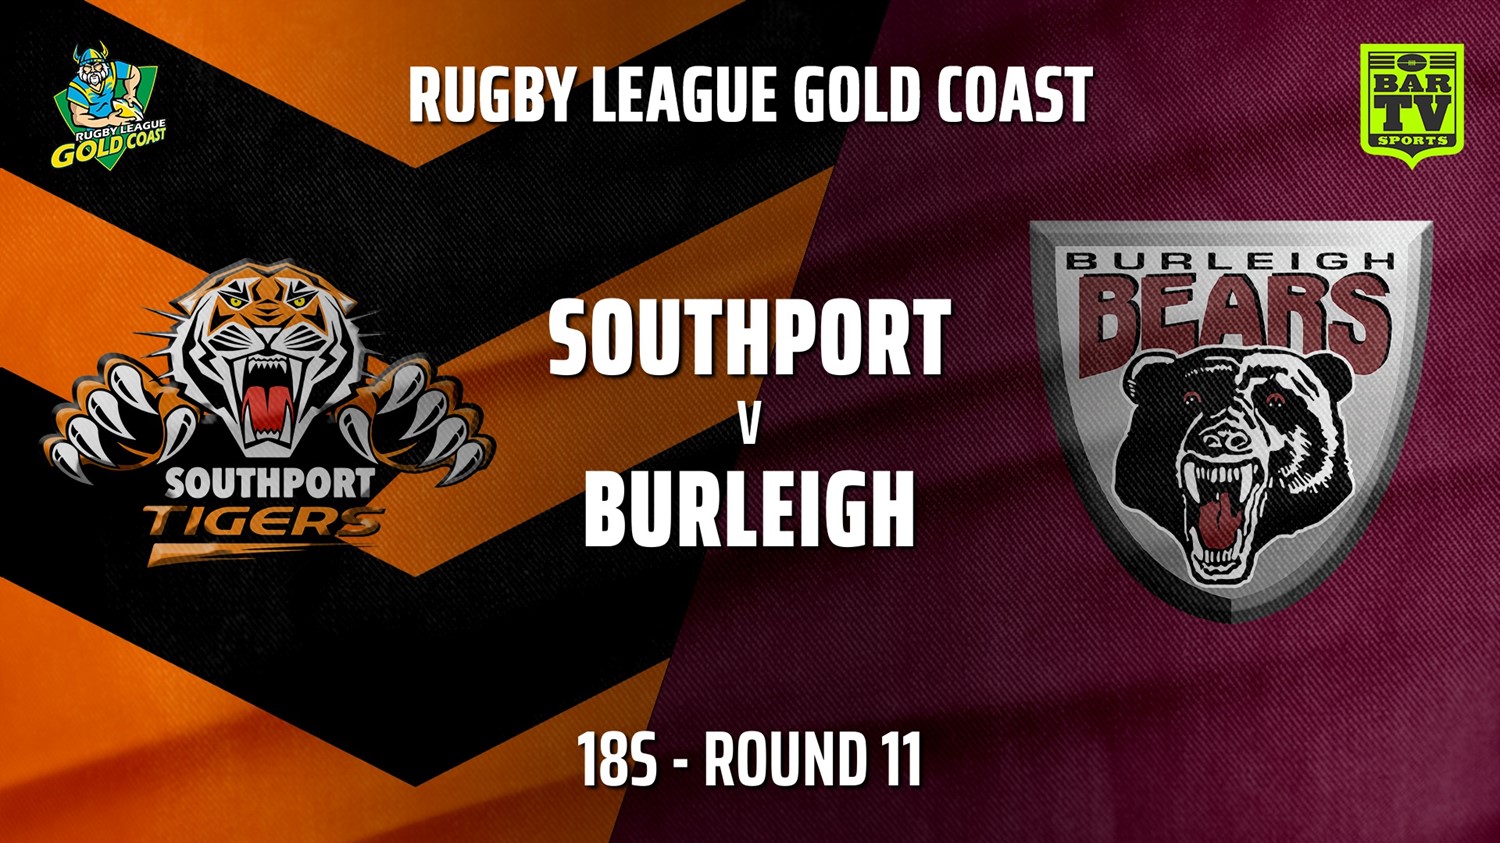 210828-Gold Coast Round 11 - 18s - Southport Tigers v Burleigh Bears Slate Image